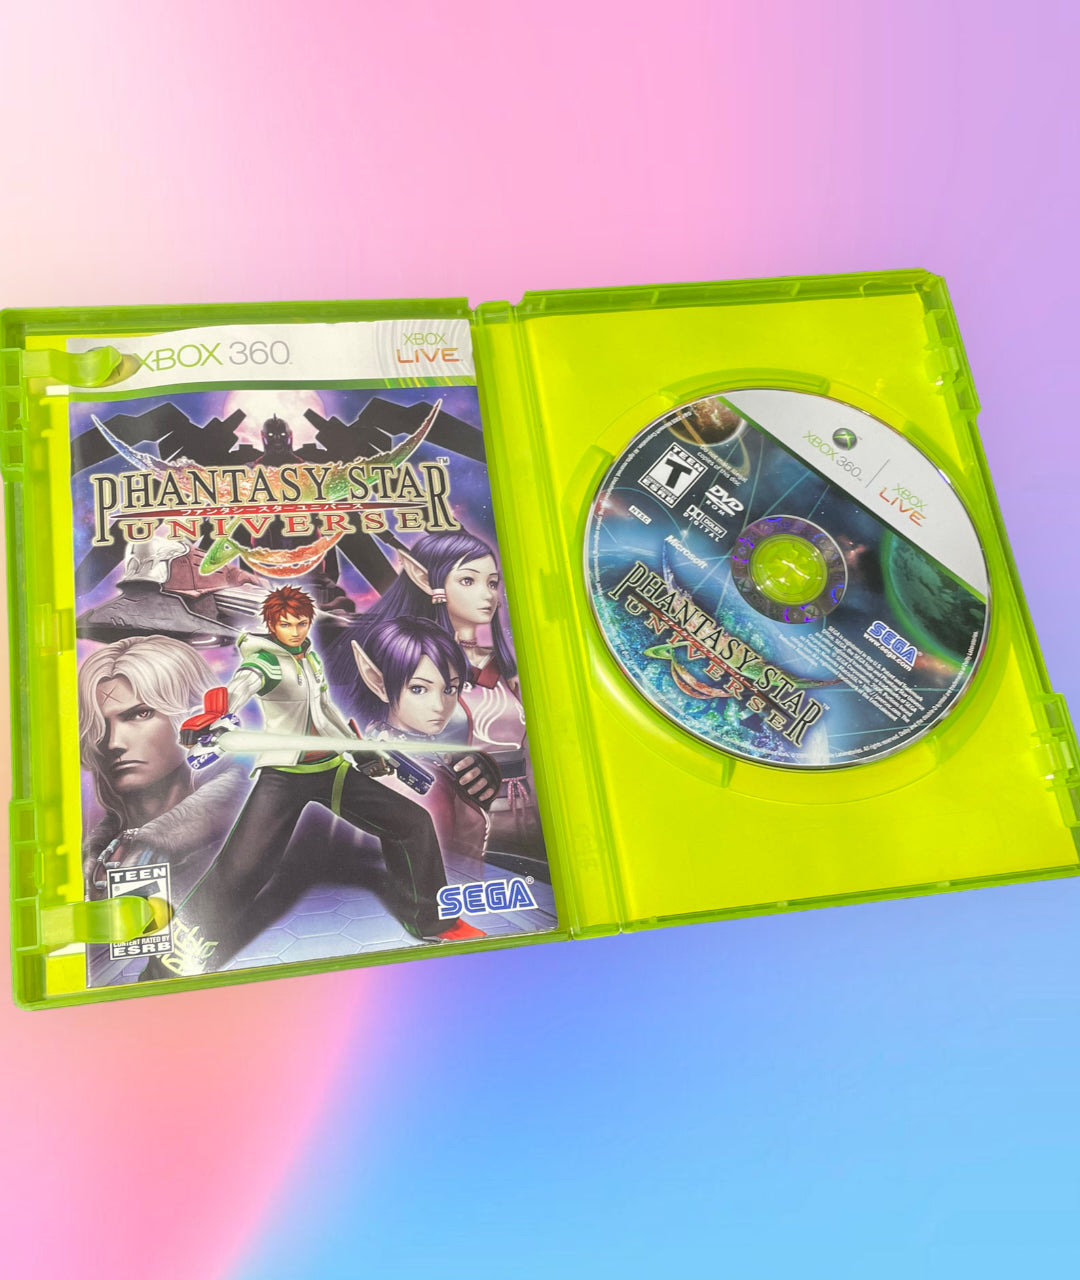 Phantasy Star Universe (Microsoft Xbox 360, 2006)